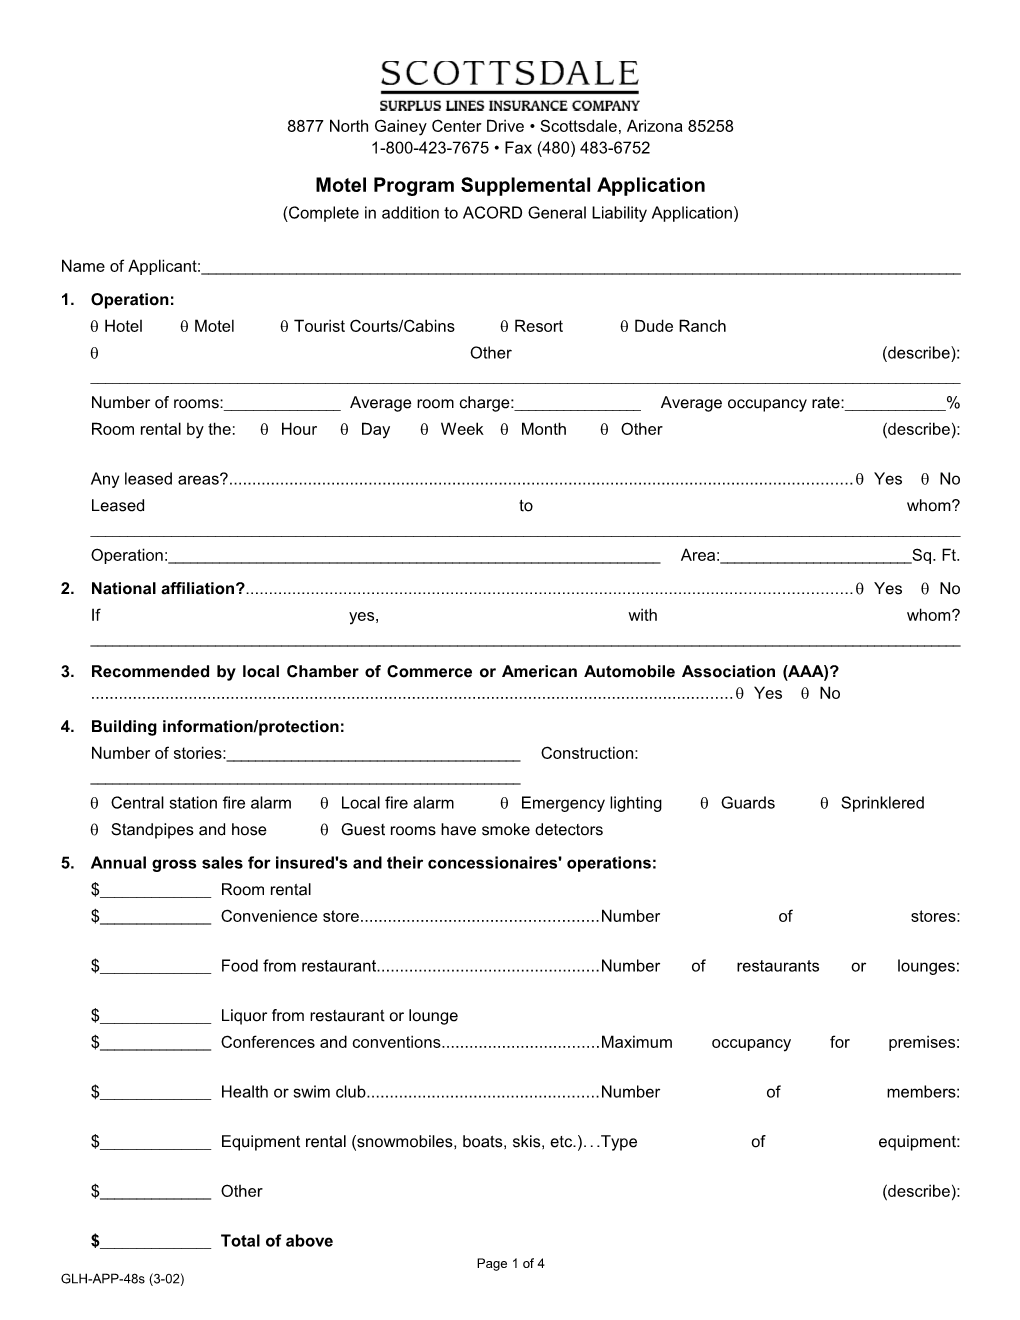 Motel Program Supplemental Application